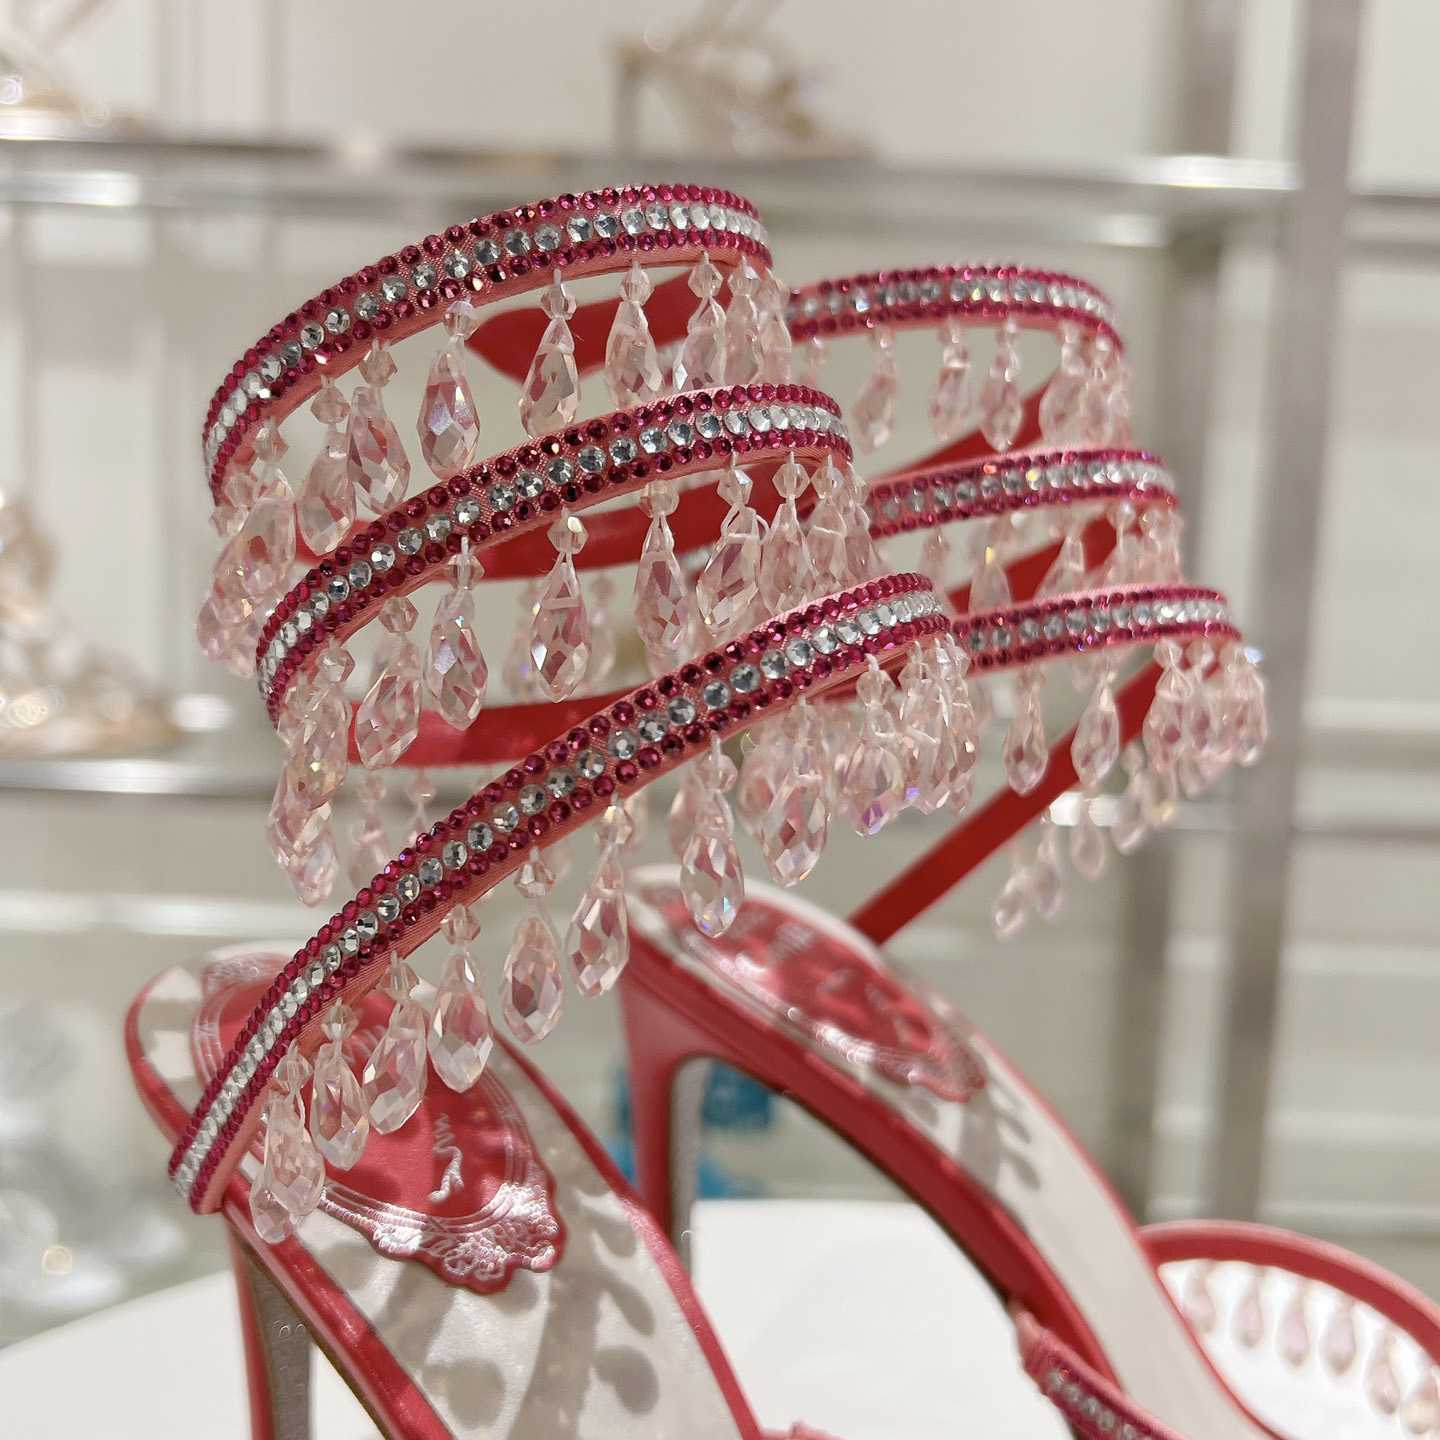 Rene Caovilla Chandelier 95mm Crystal-embellished Sandals - PerfectKickZ